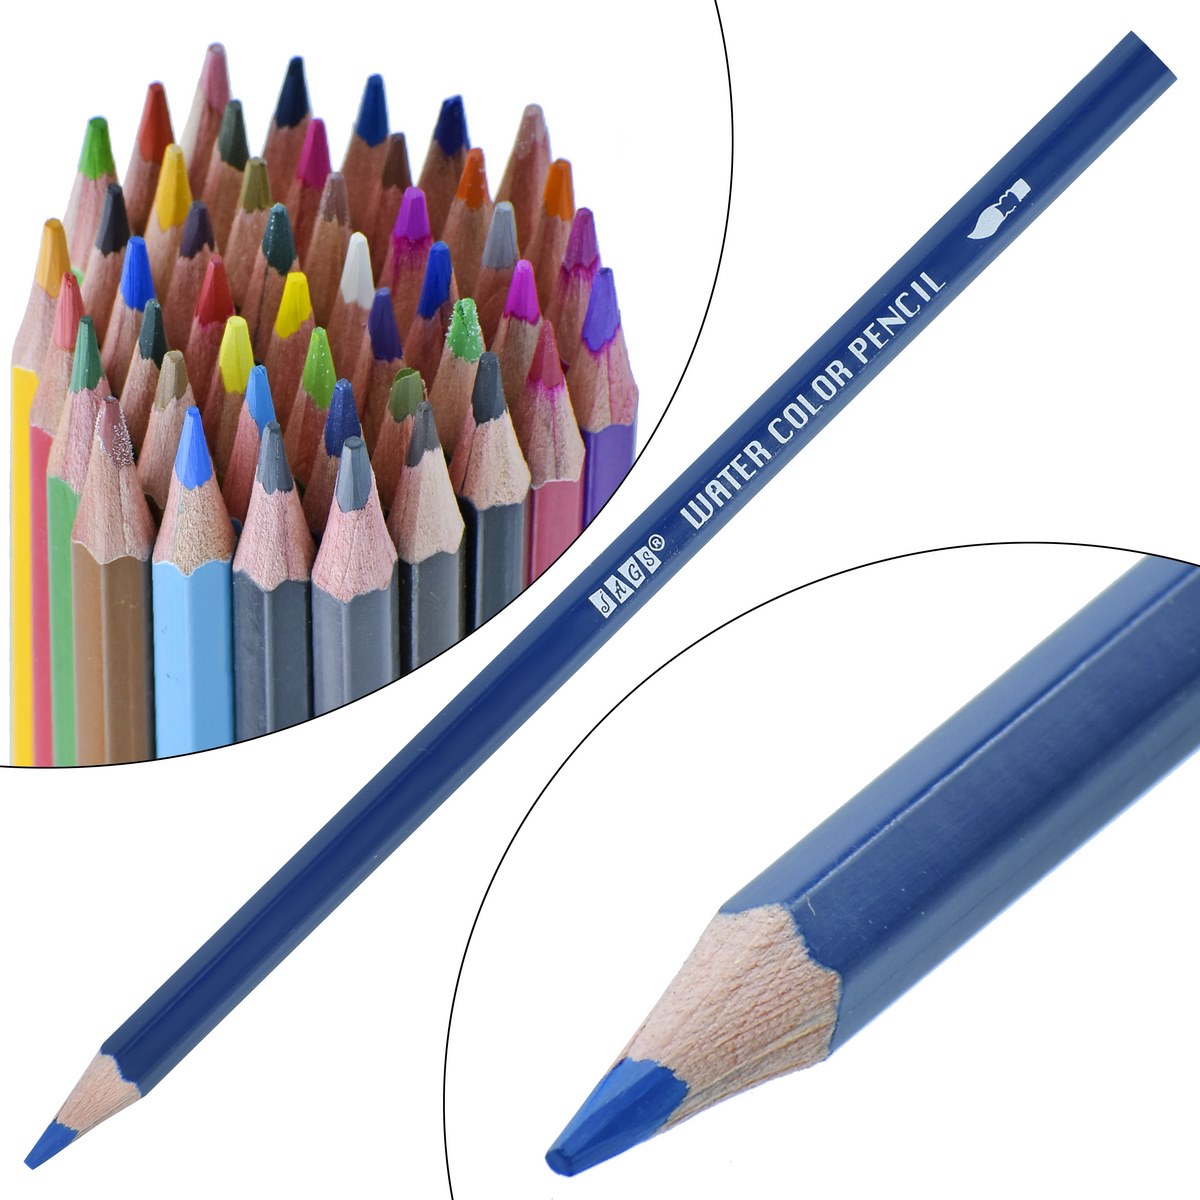 jags-mumbai Pencil Jags Water Colour Pencil | 36 Colours